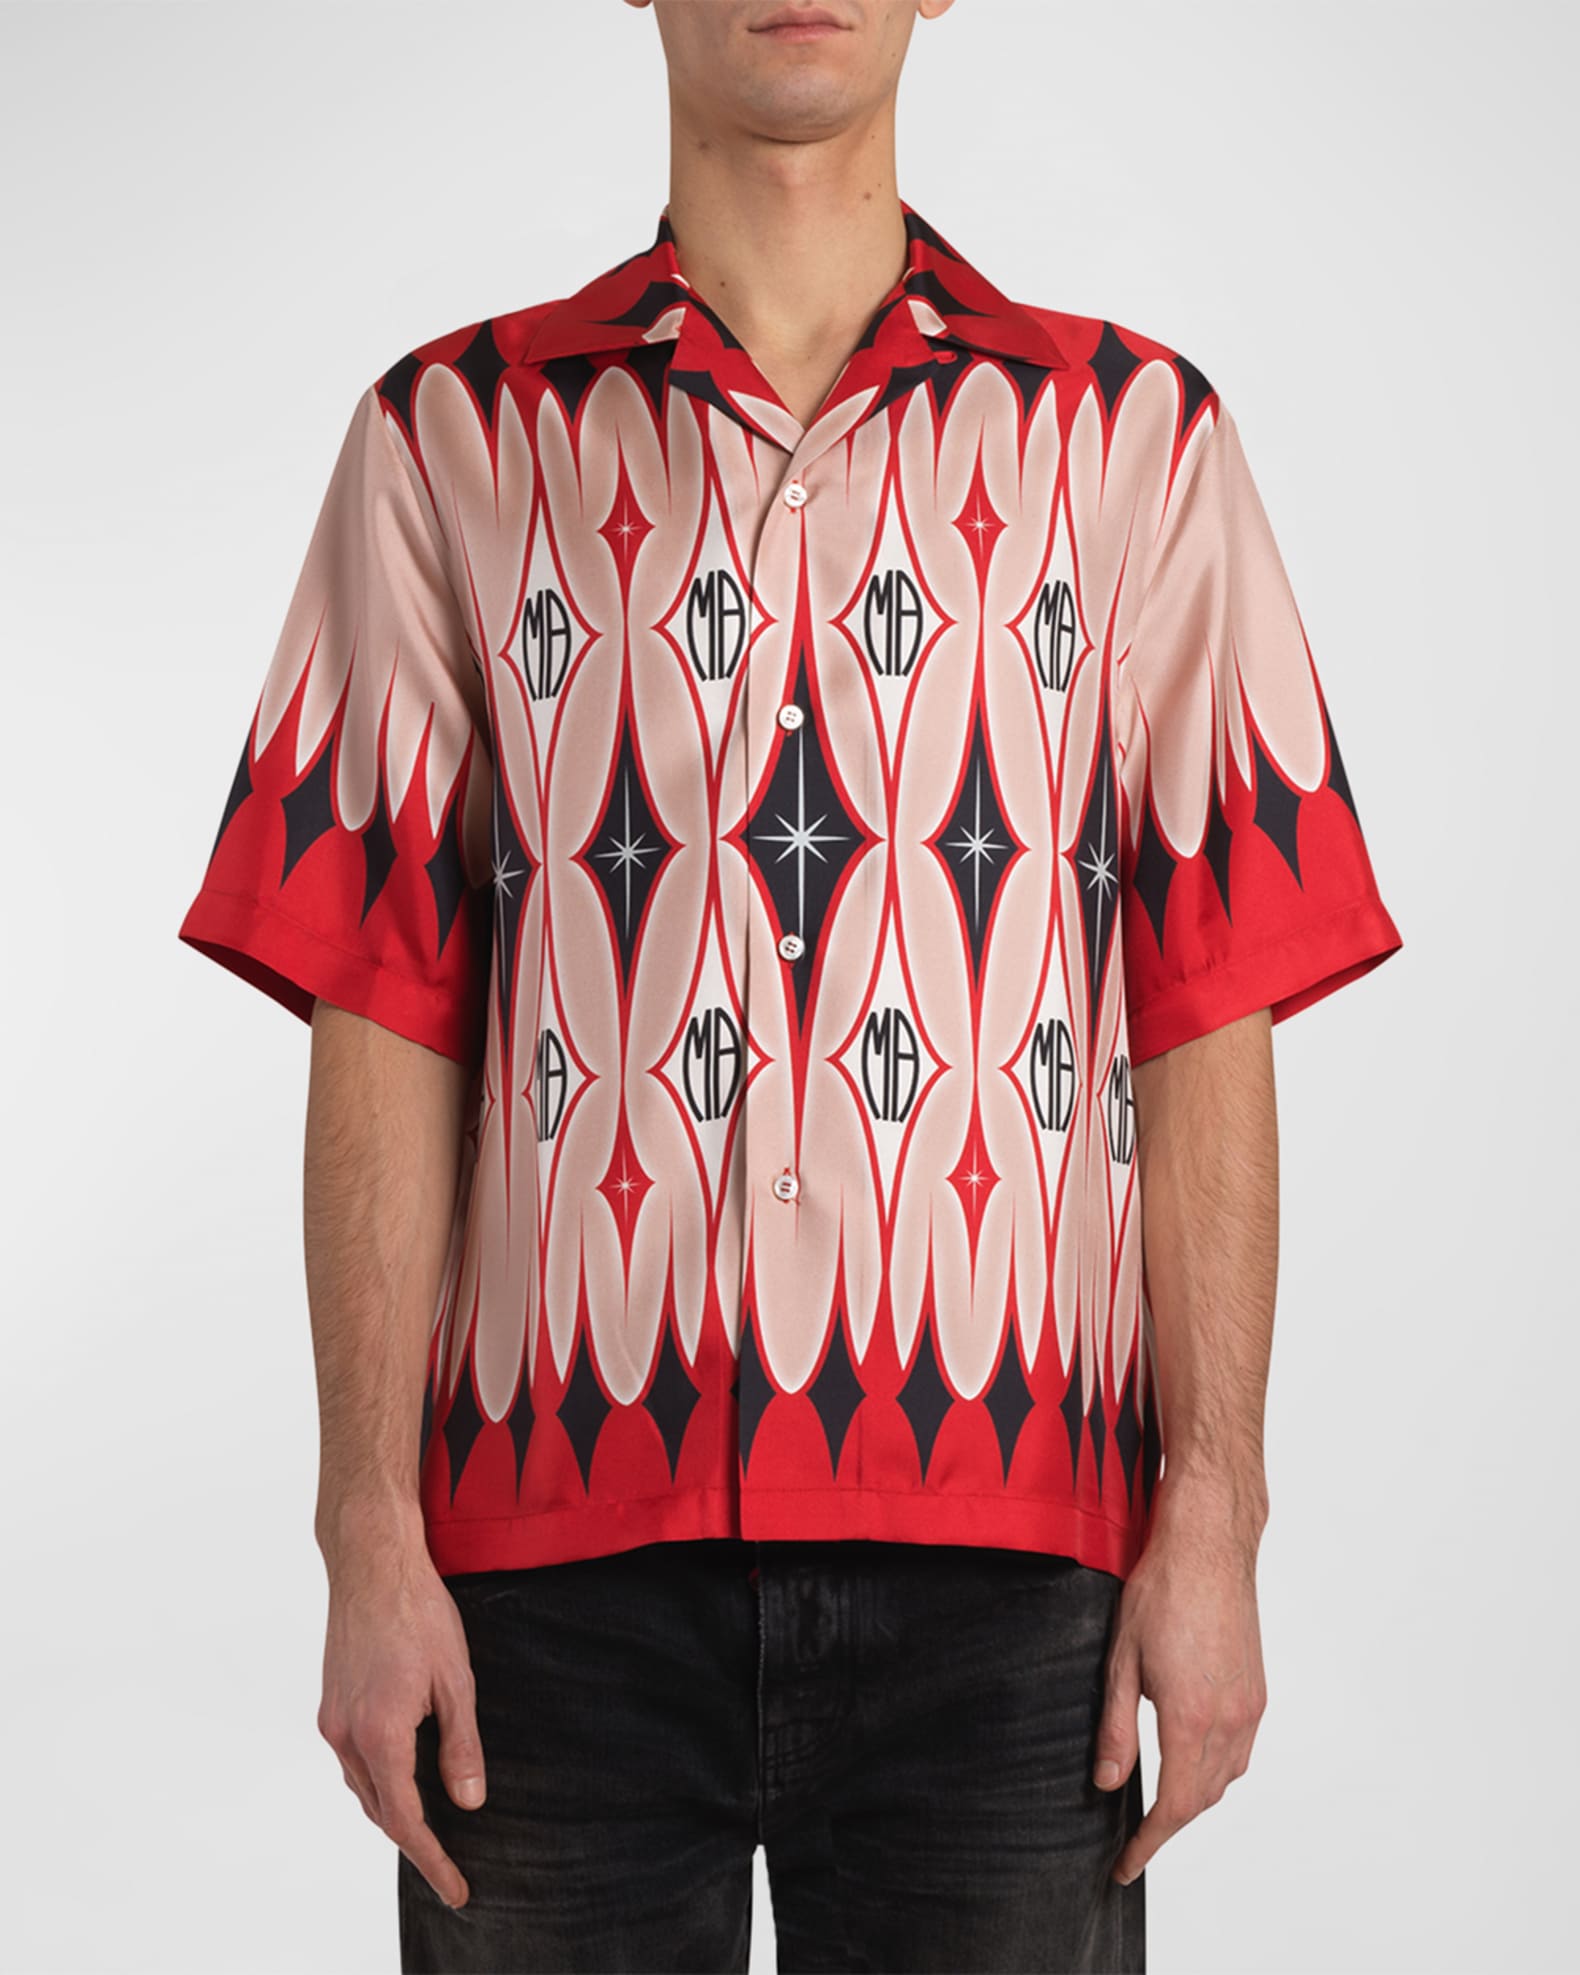 Prada Multicolor Printed Cotton Short Sleeve Bowling Shirt L Prada